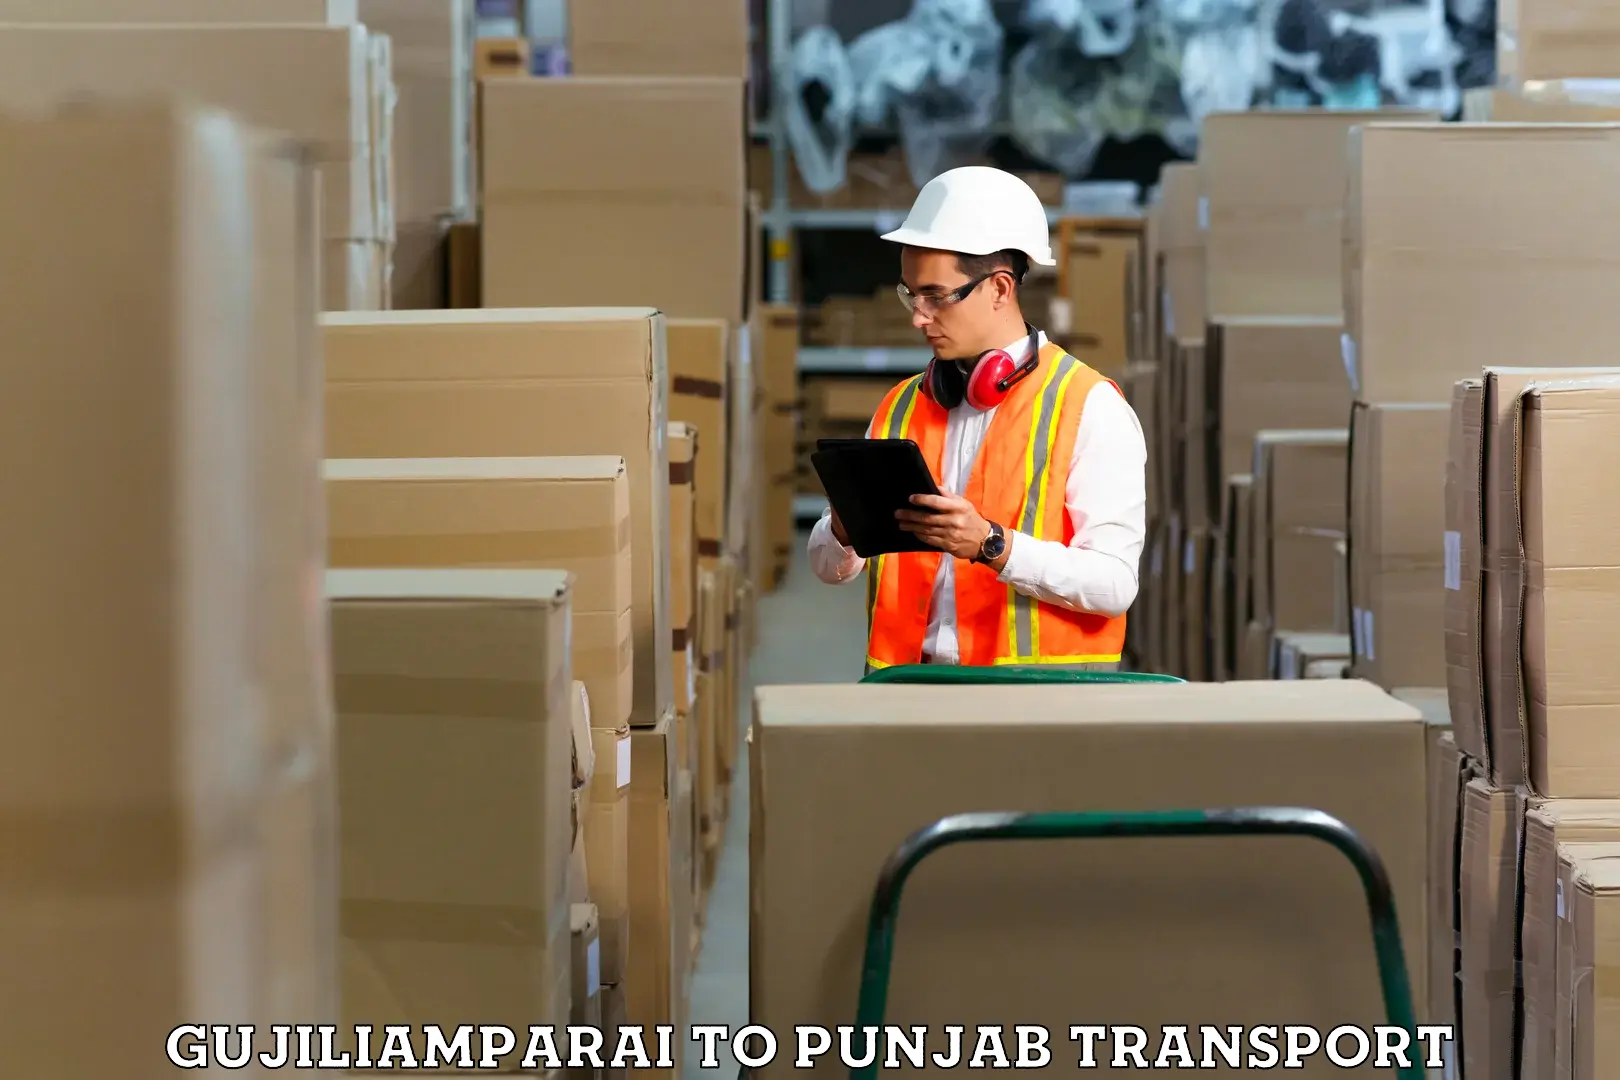 Delivery service Gujiliamparai to Anandpur Sahib